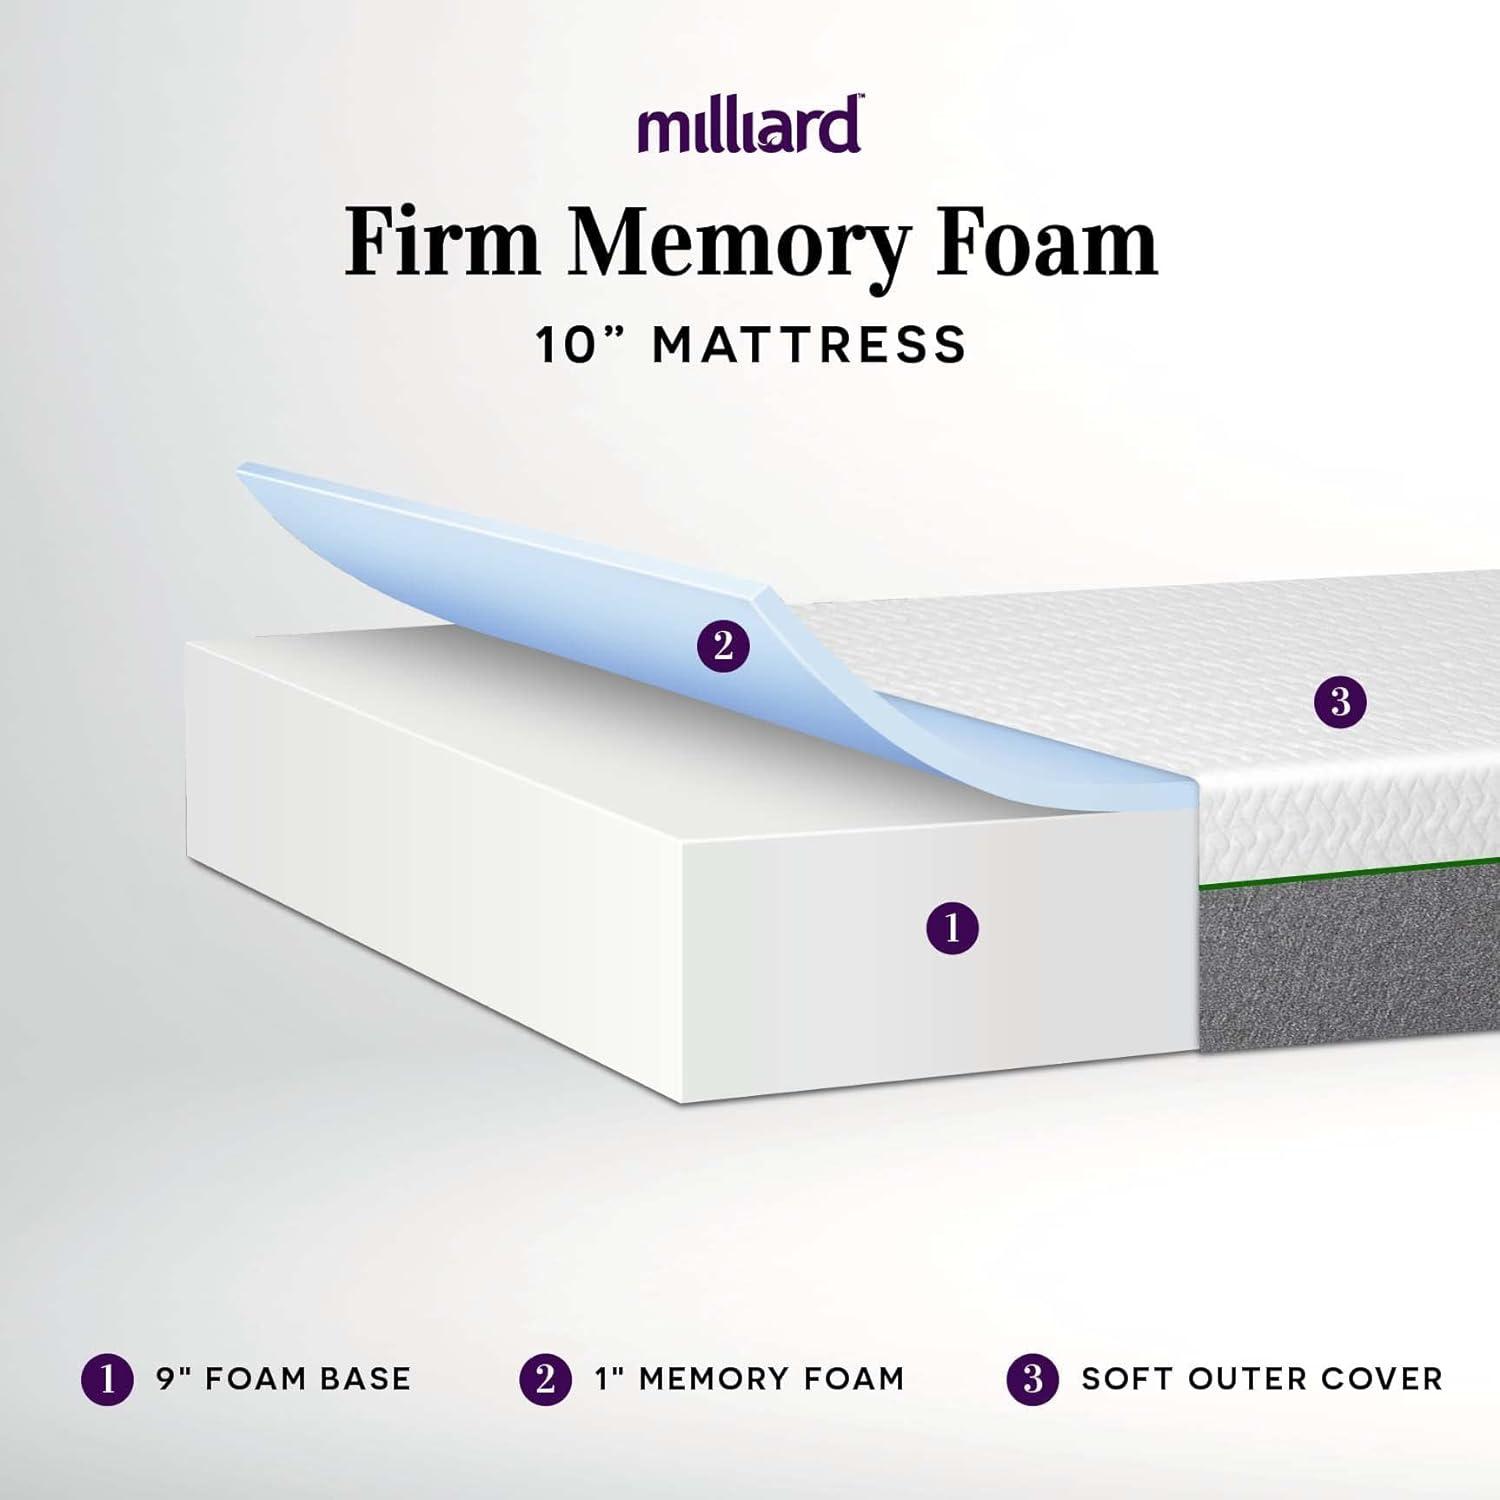 DreamFlex 10" Full Memory Foam Mattress with Hypoallergenic Cover